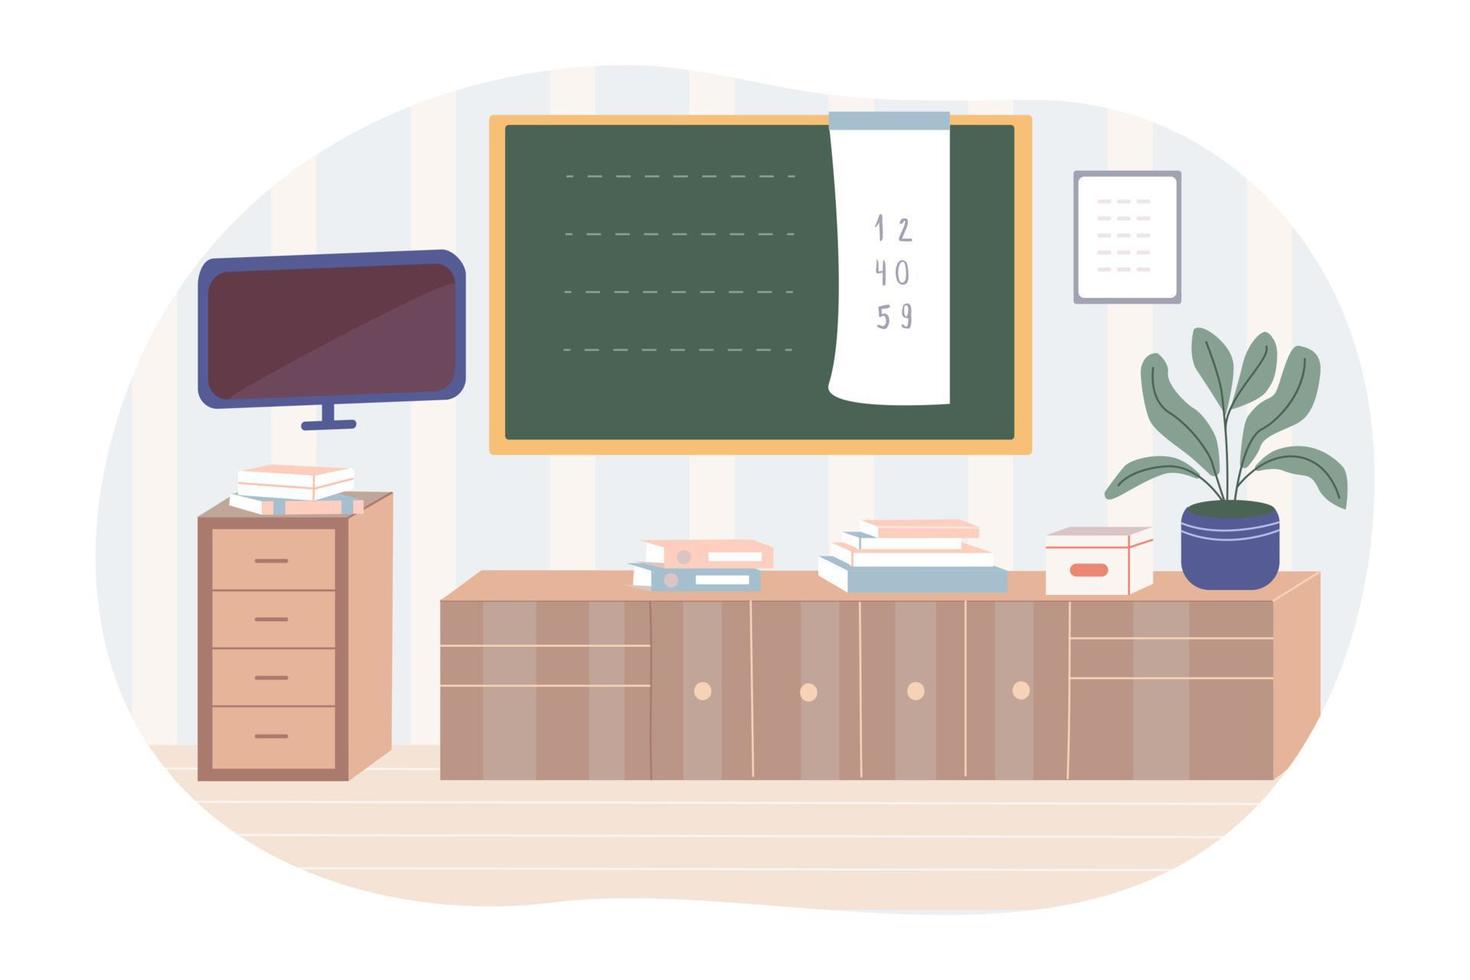 School classroom with blackboard. Education background. vector